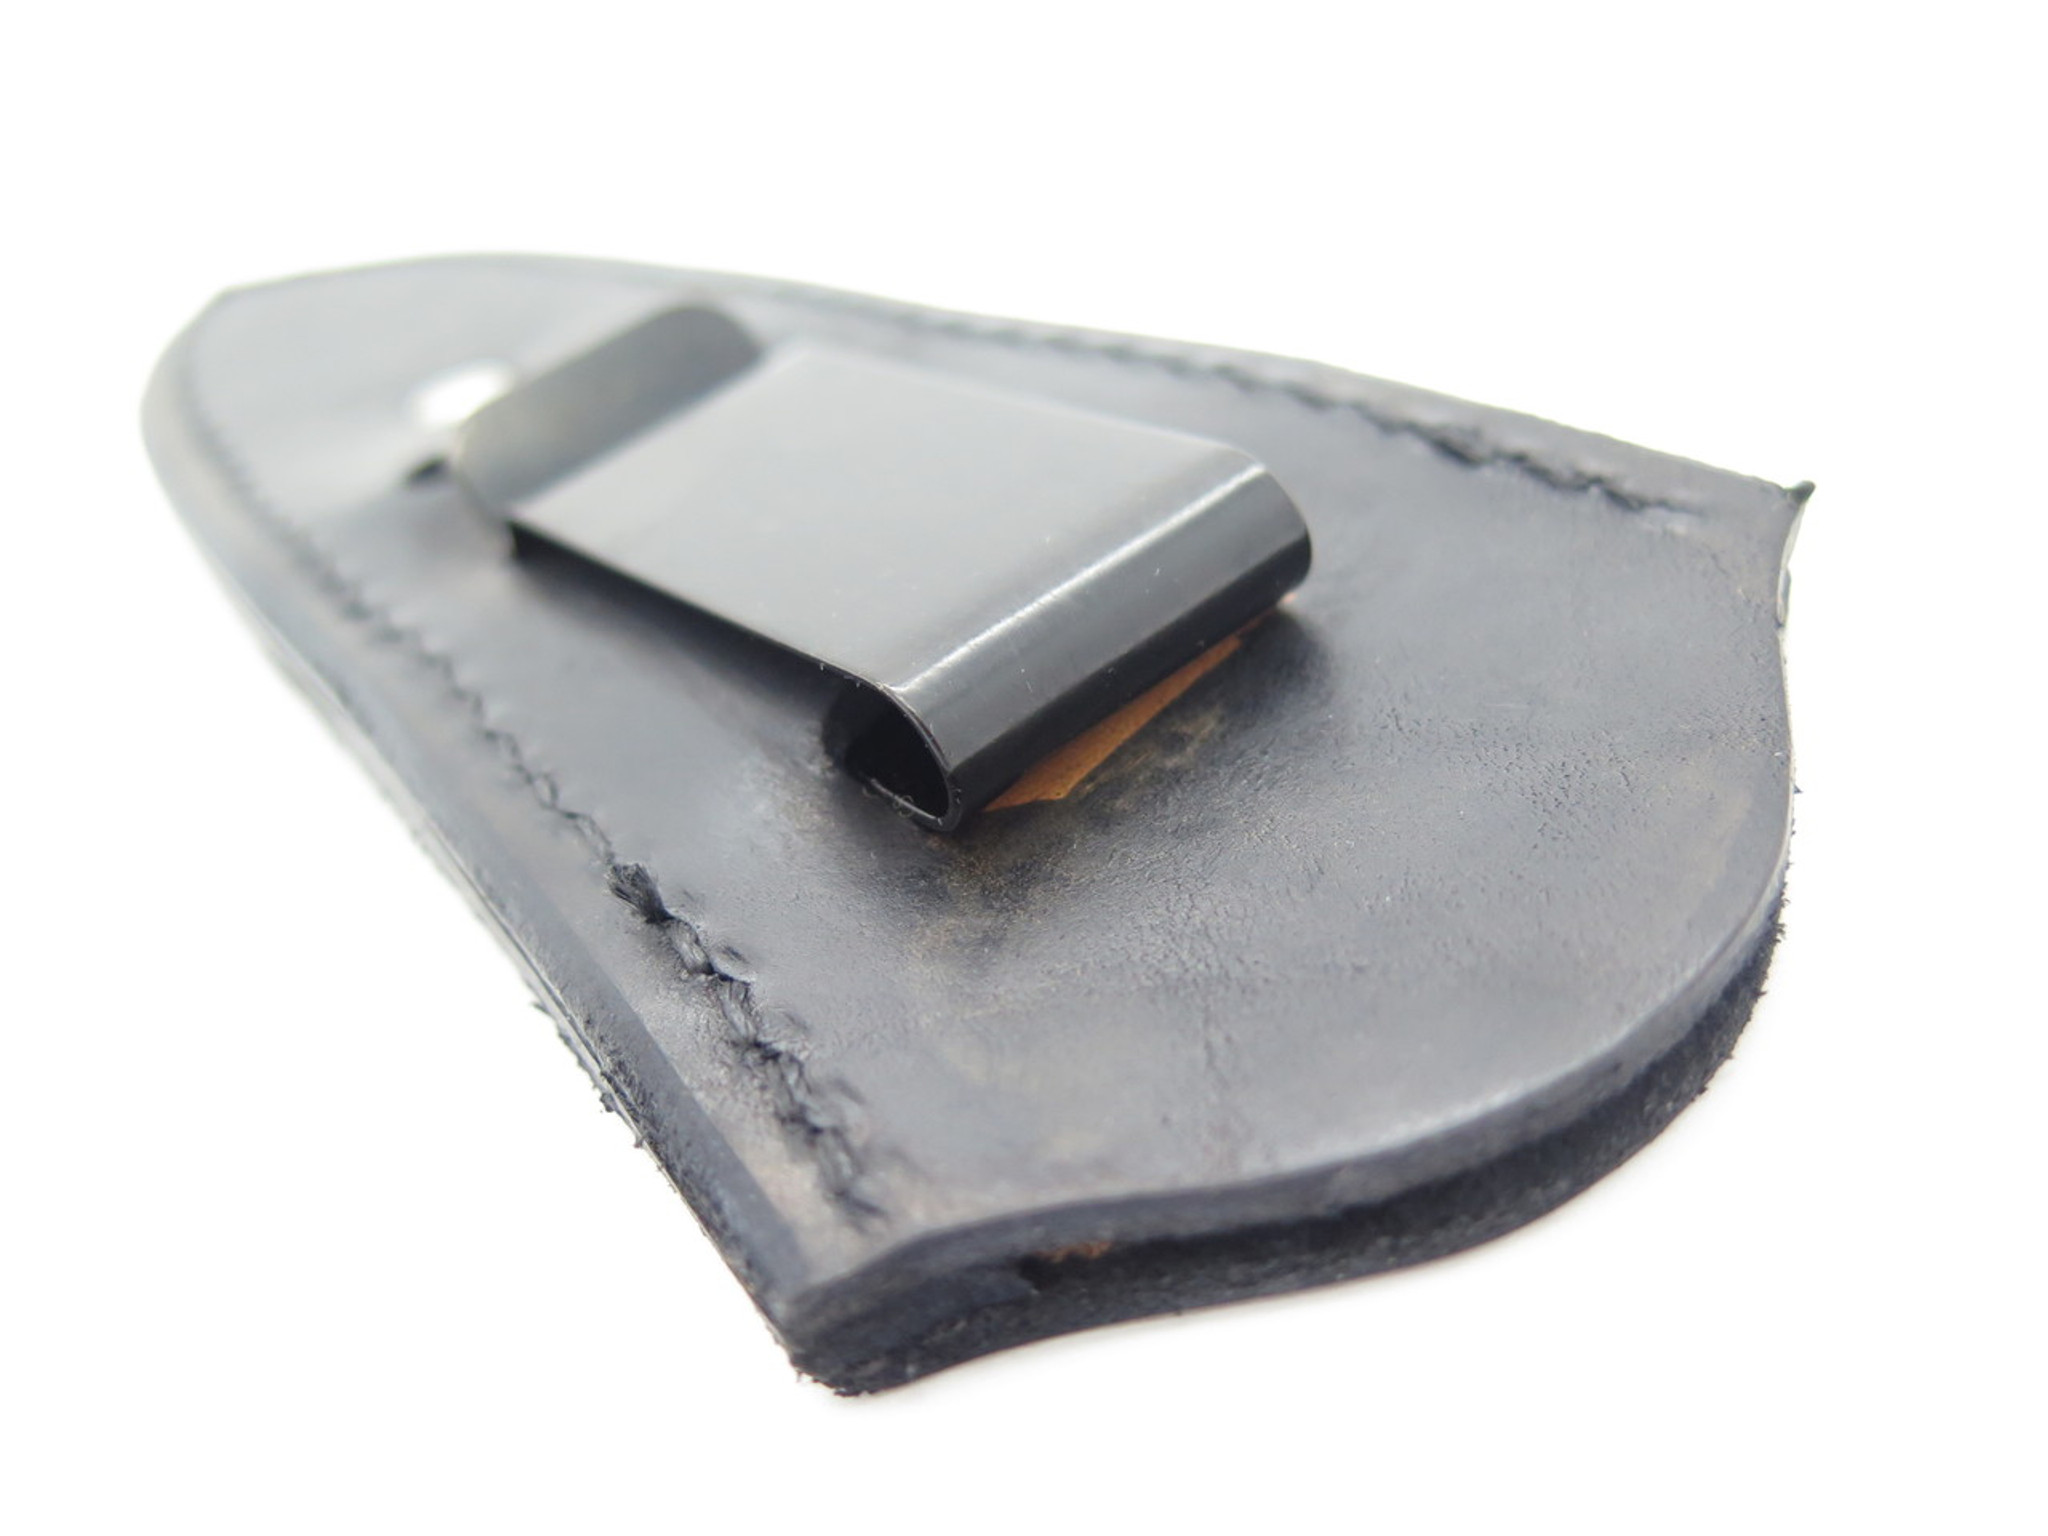 Custom USA Leather Fixed 3 Blade Dagger Knife Boot Belt Clip